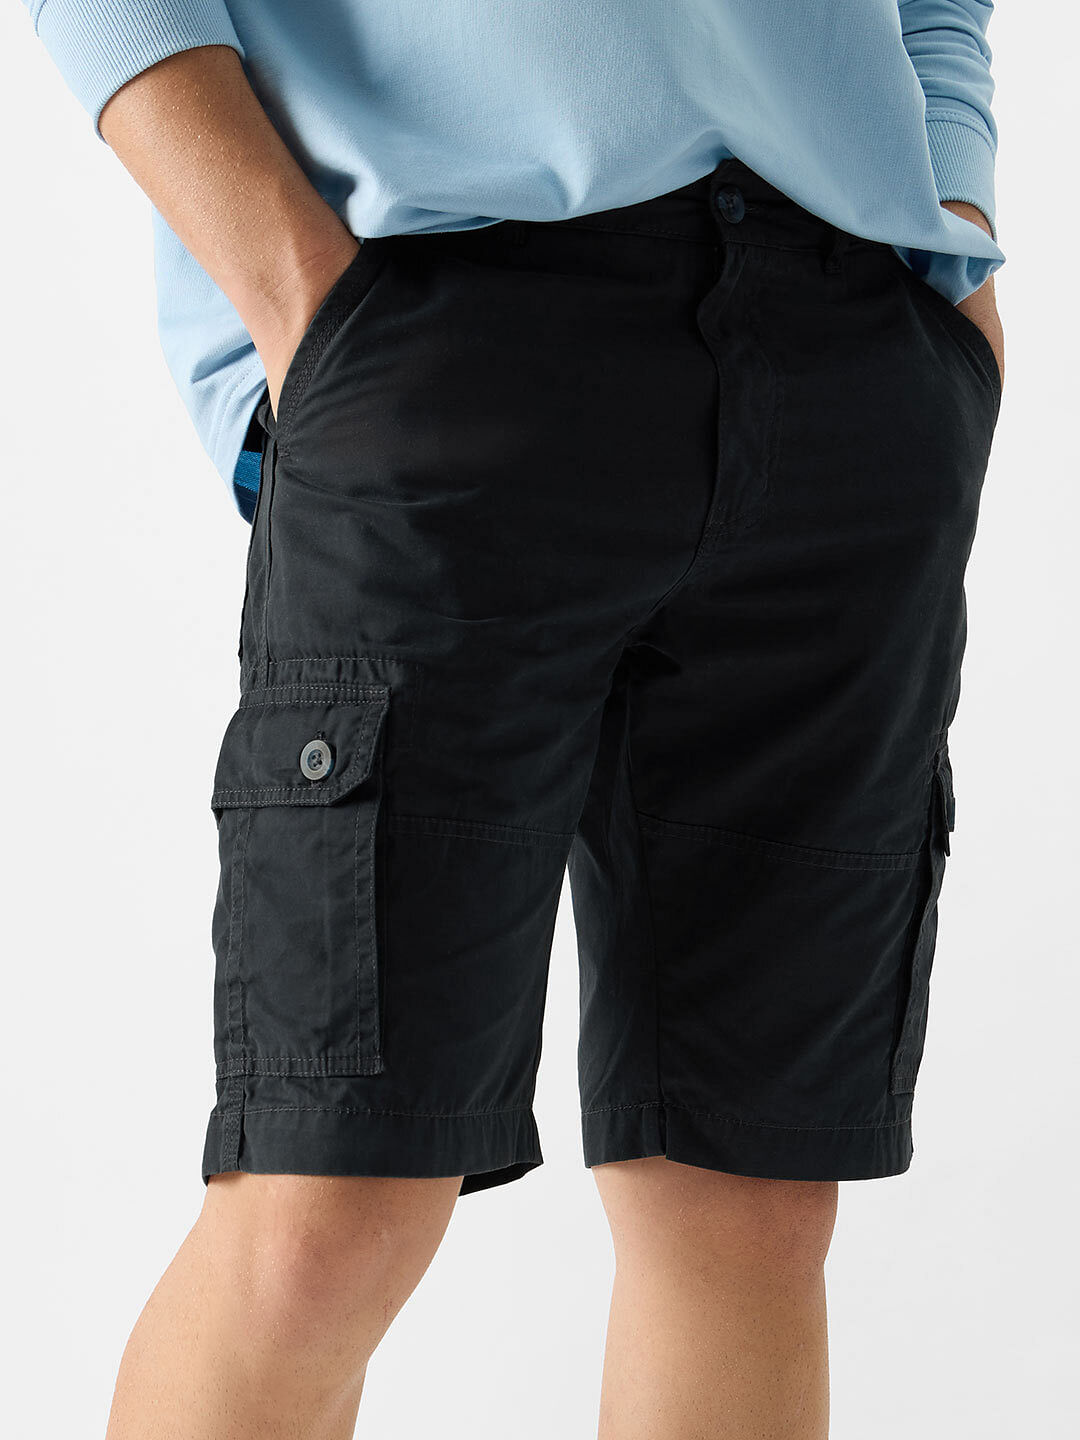 Buy Solids: Navy Blue Men Cargo Shorts Online